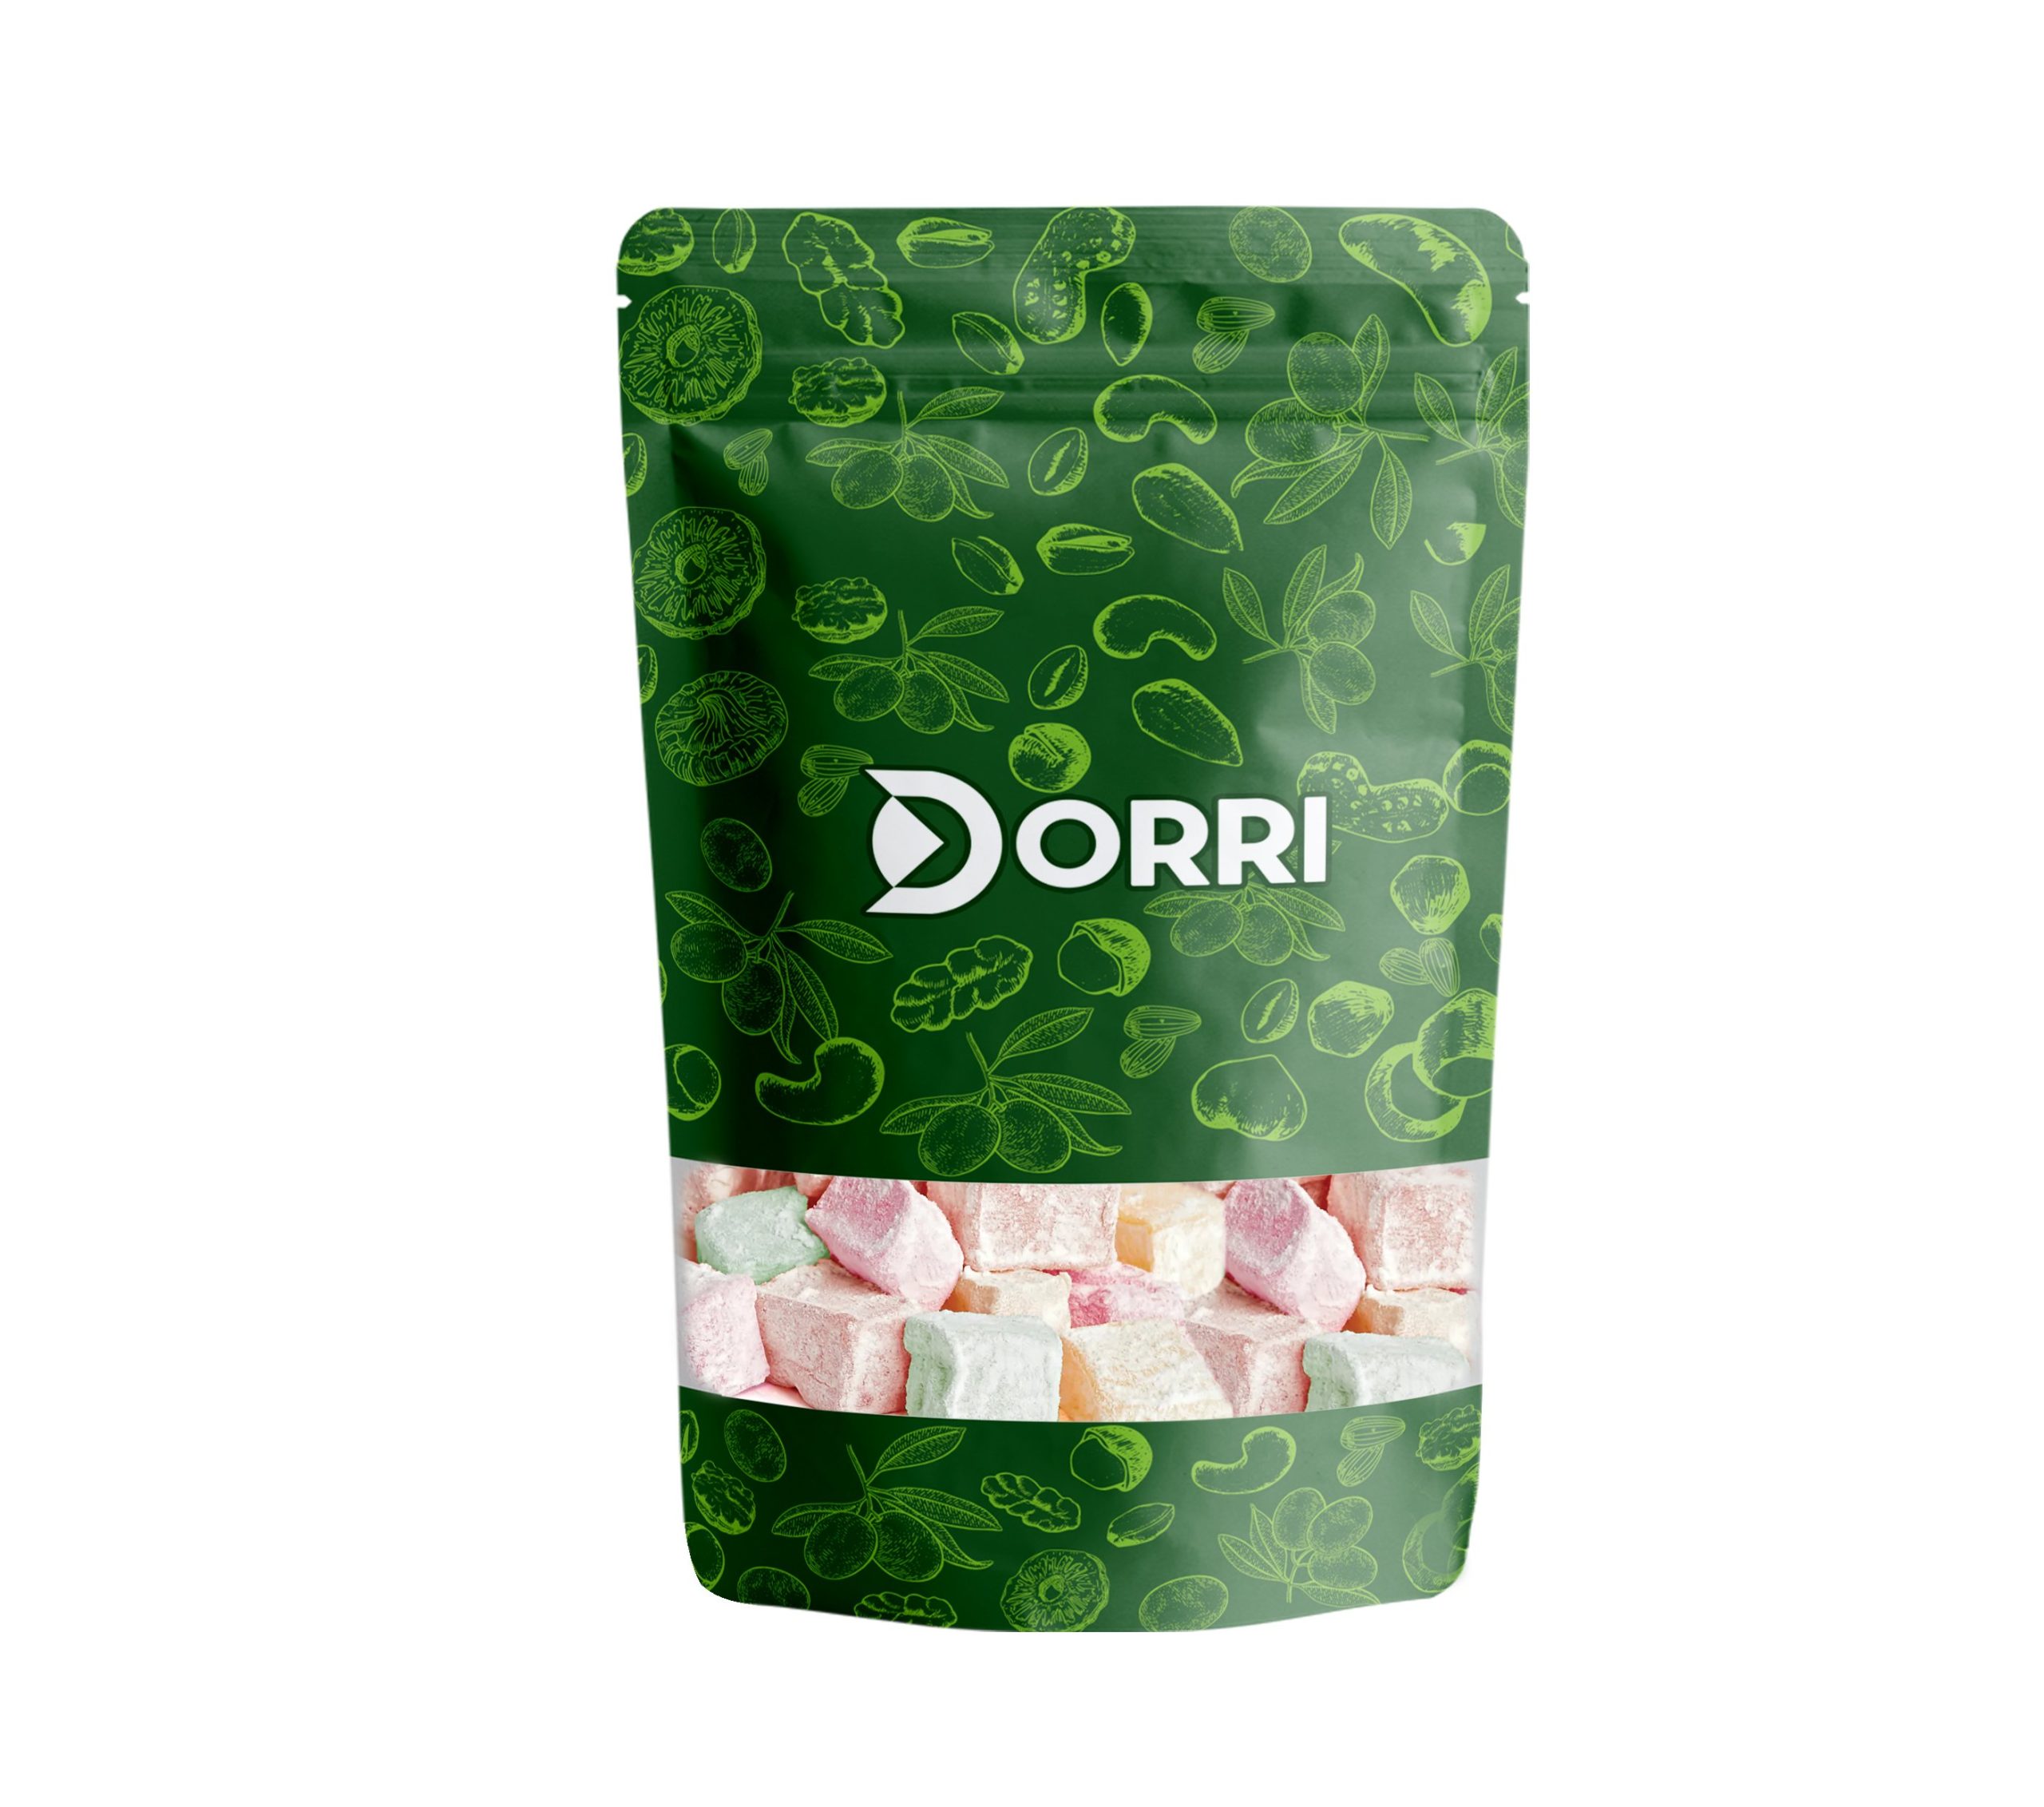 Dorri - Turkish Delight Mixed